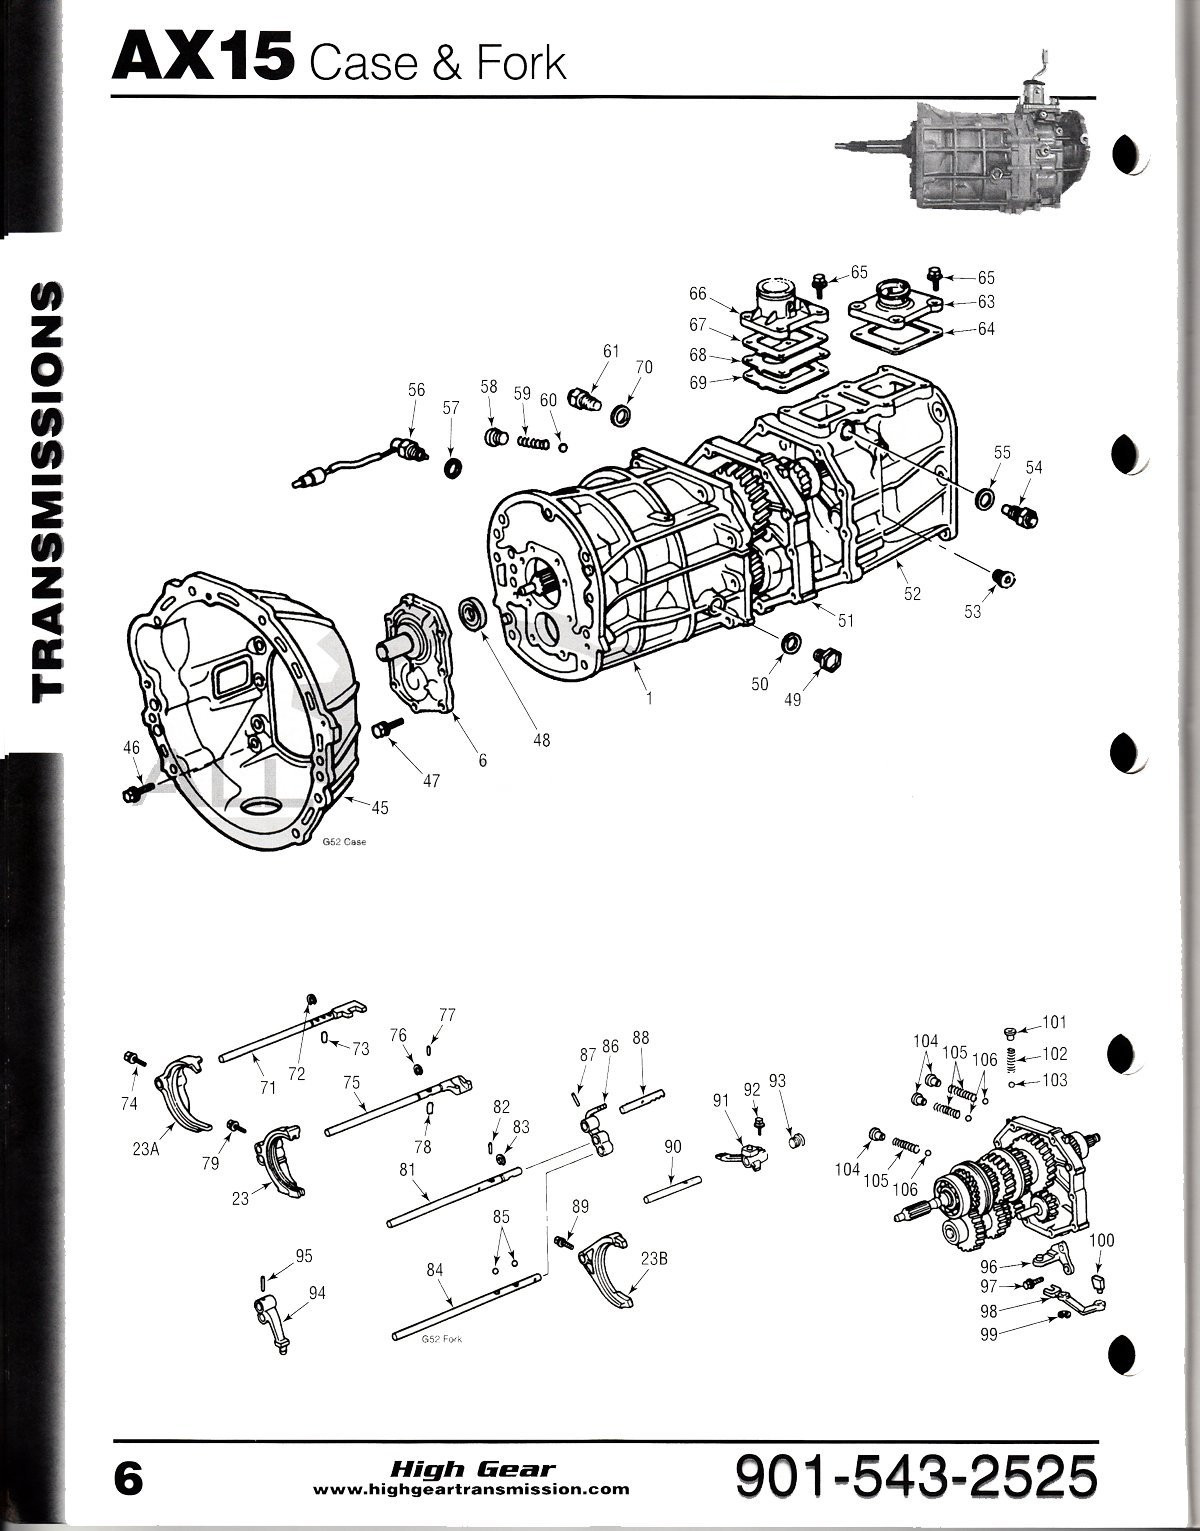 Diagram Of A Manual Transmission Diagrams – Rebuilt Ax-15 Jeep Manual Transmission Dyno Tested Of Diagram Of A Manual Transmission